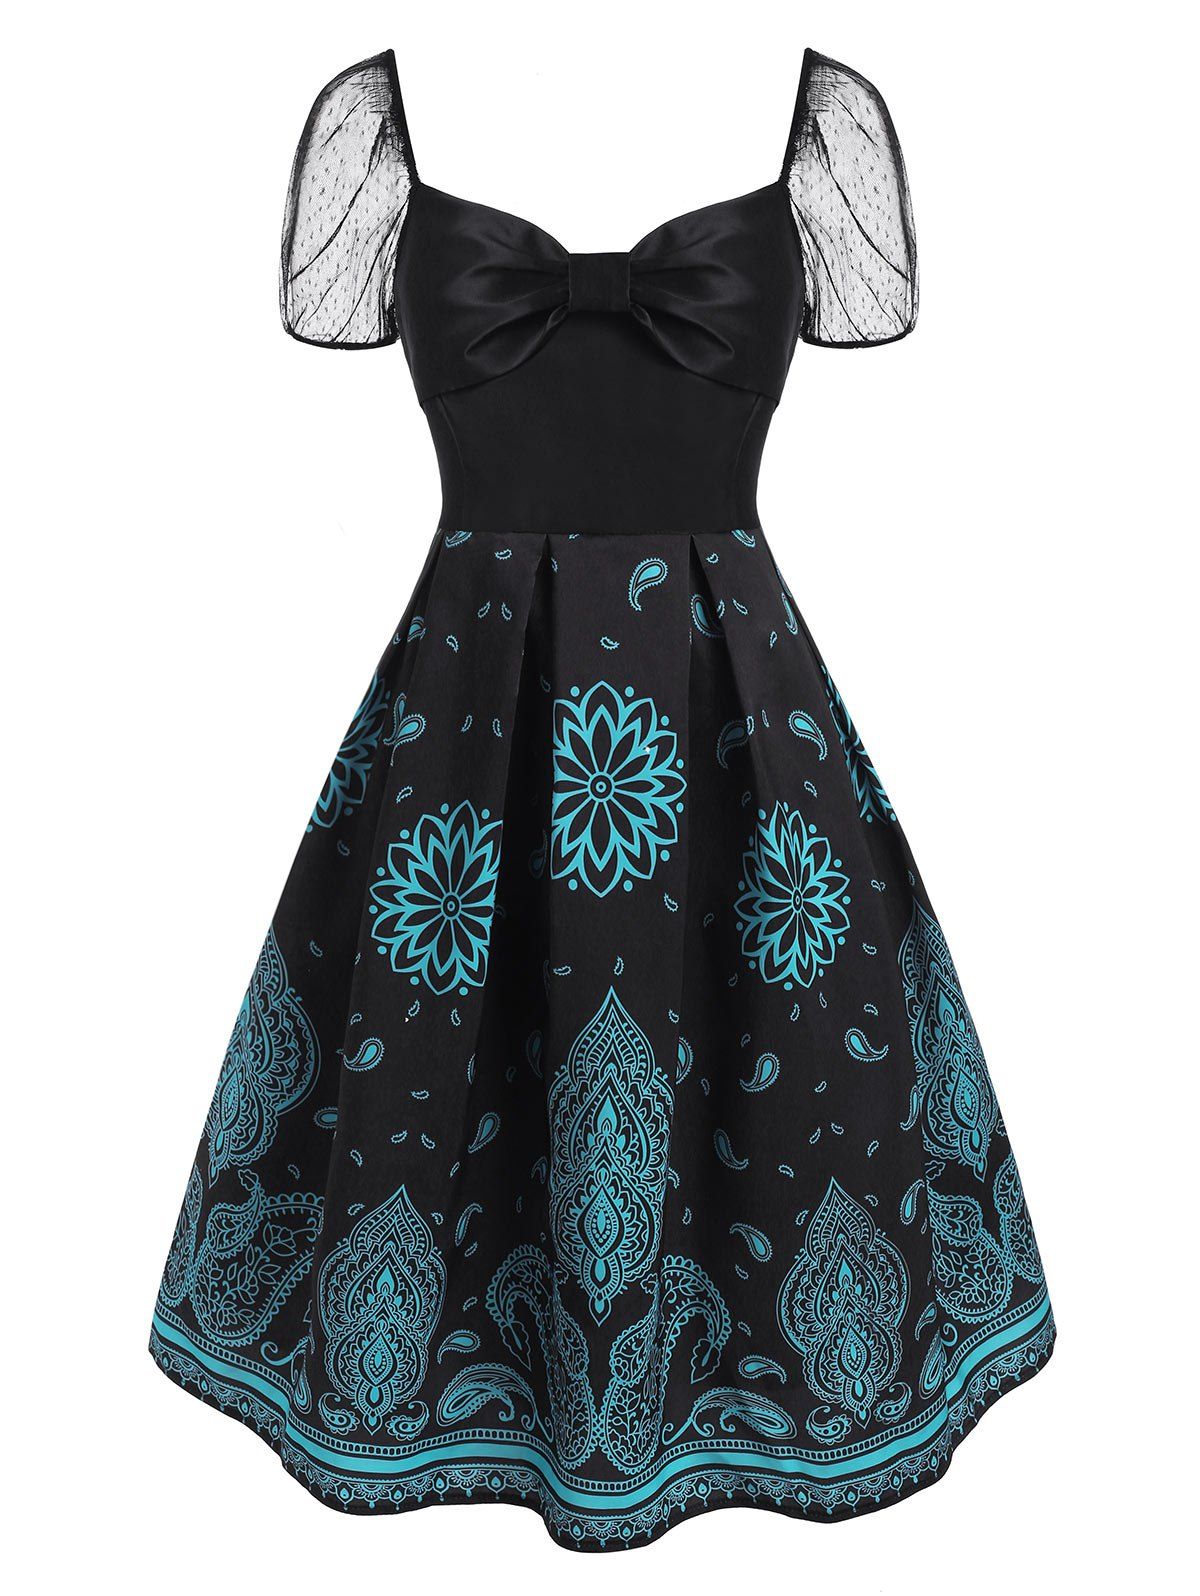 Flower Paisley Print Lace Puff Sleeve Bowknot Dress - BLACK 2XL